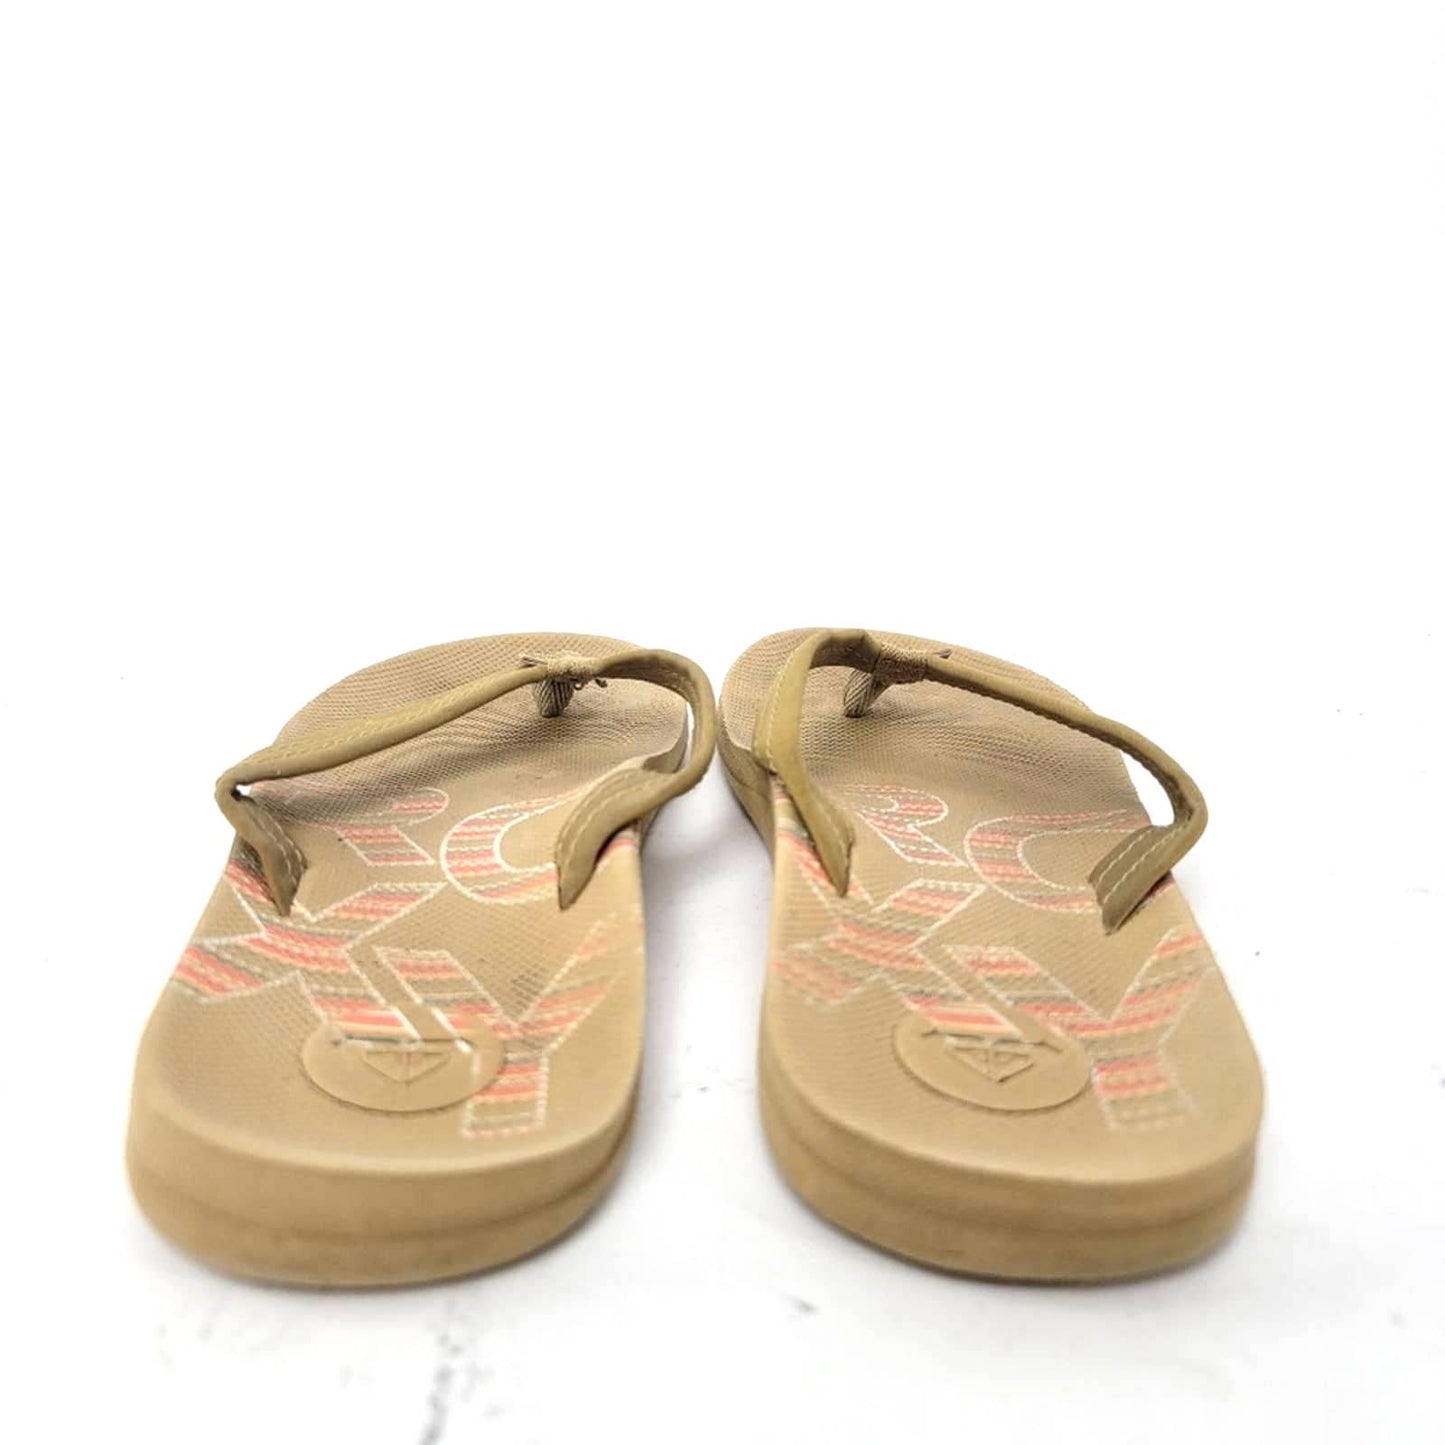 Roxy Sand Tan Flip Flop Sandals - 6